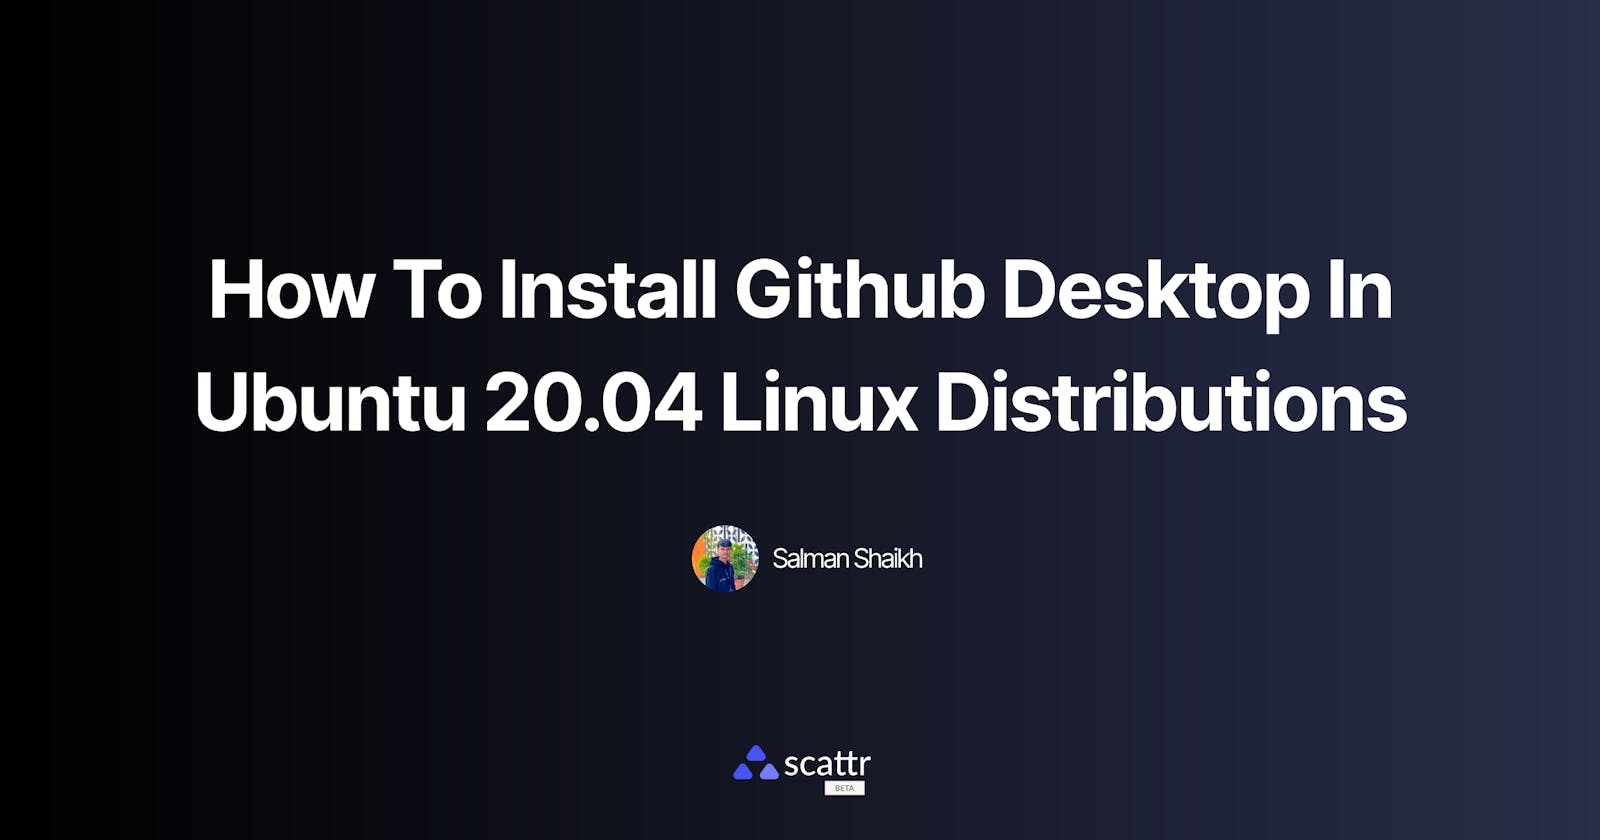 How To Install Github Desktop In Ubuntu 20.04 Linux Distributions